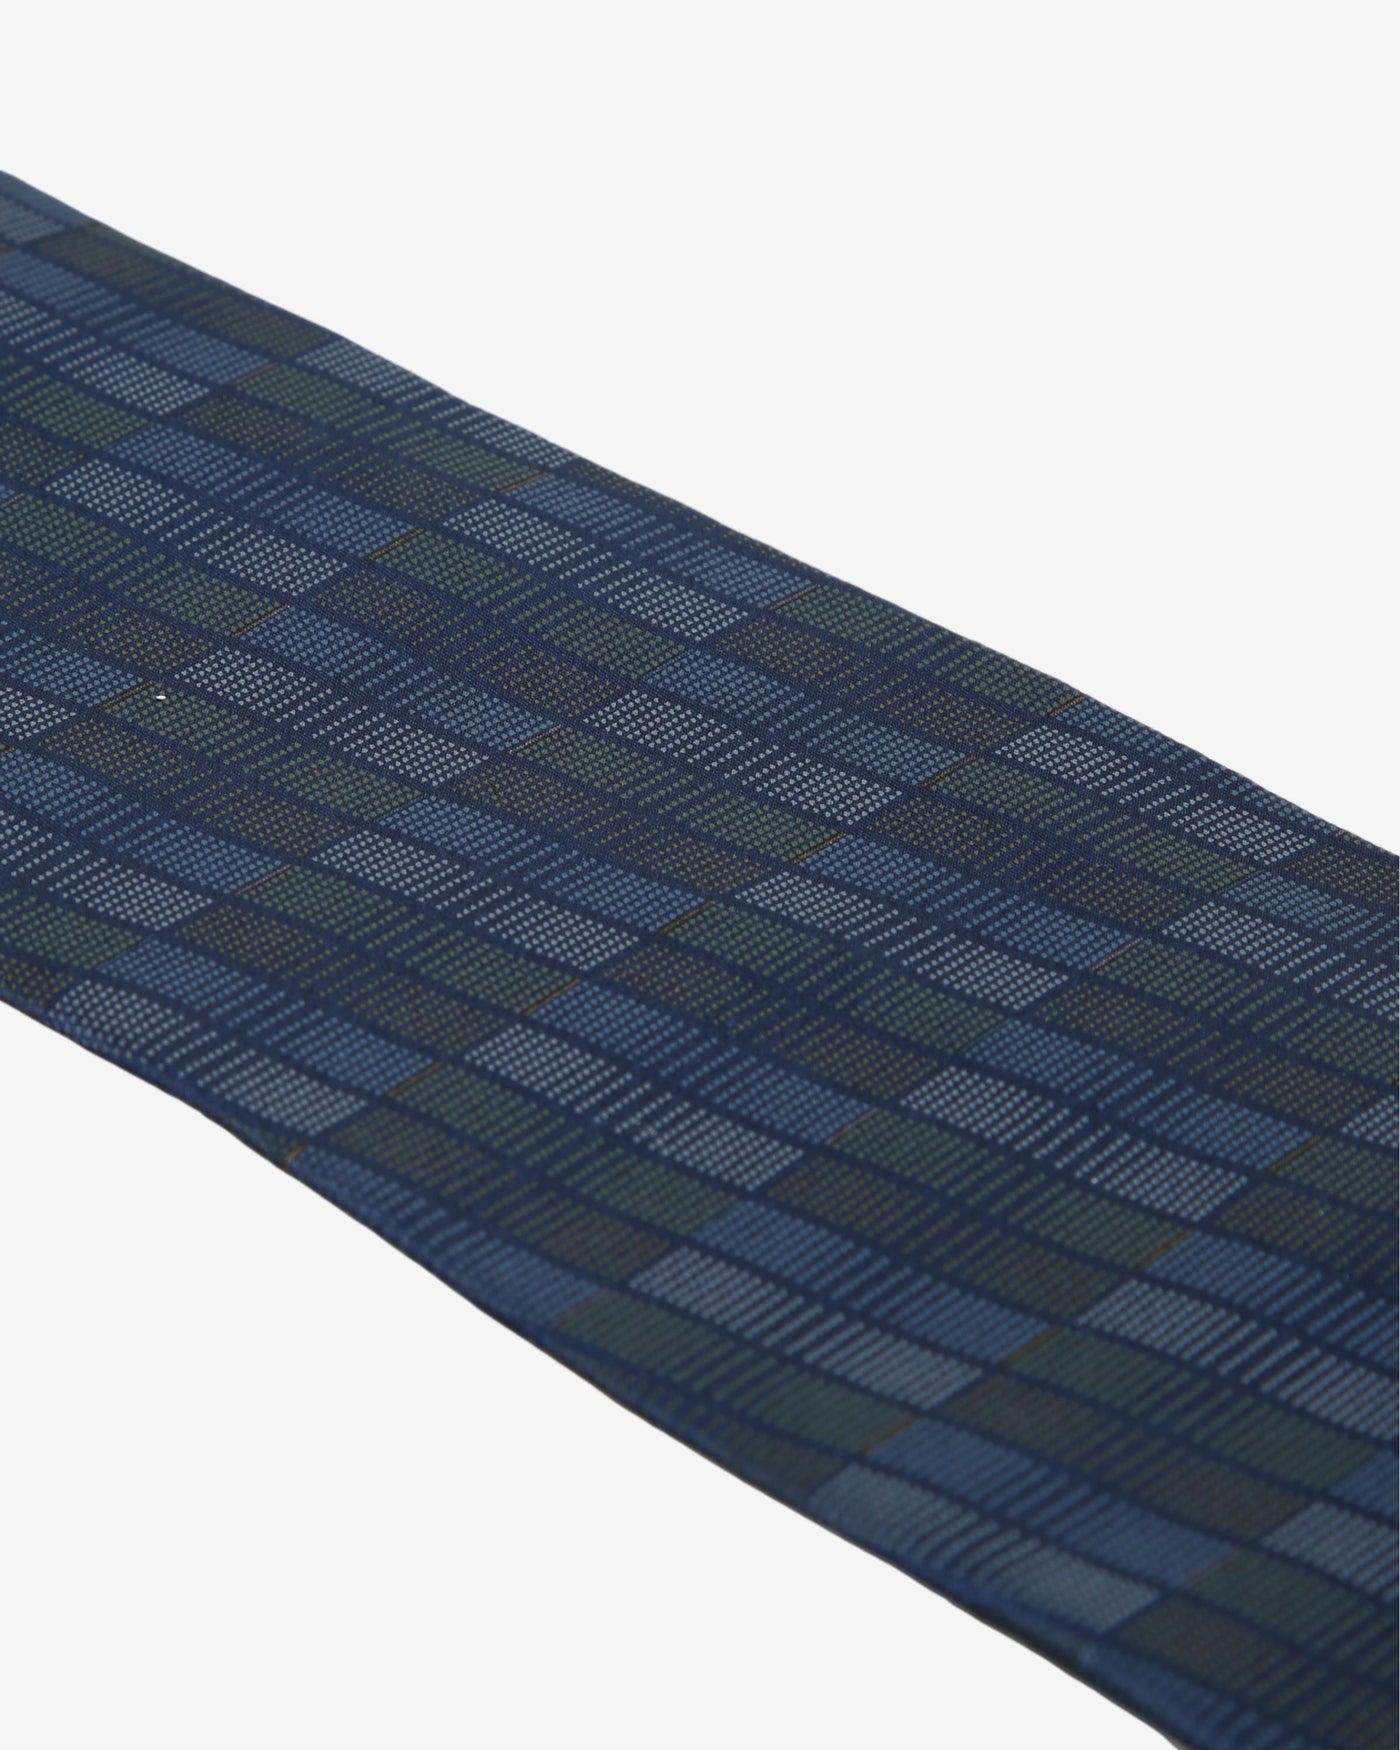 DKNY Blue / Navy Patterned Silk Tie